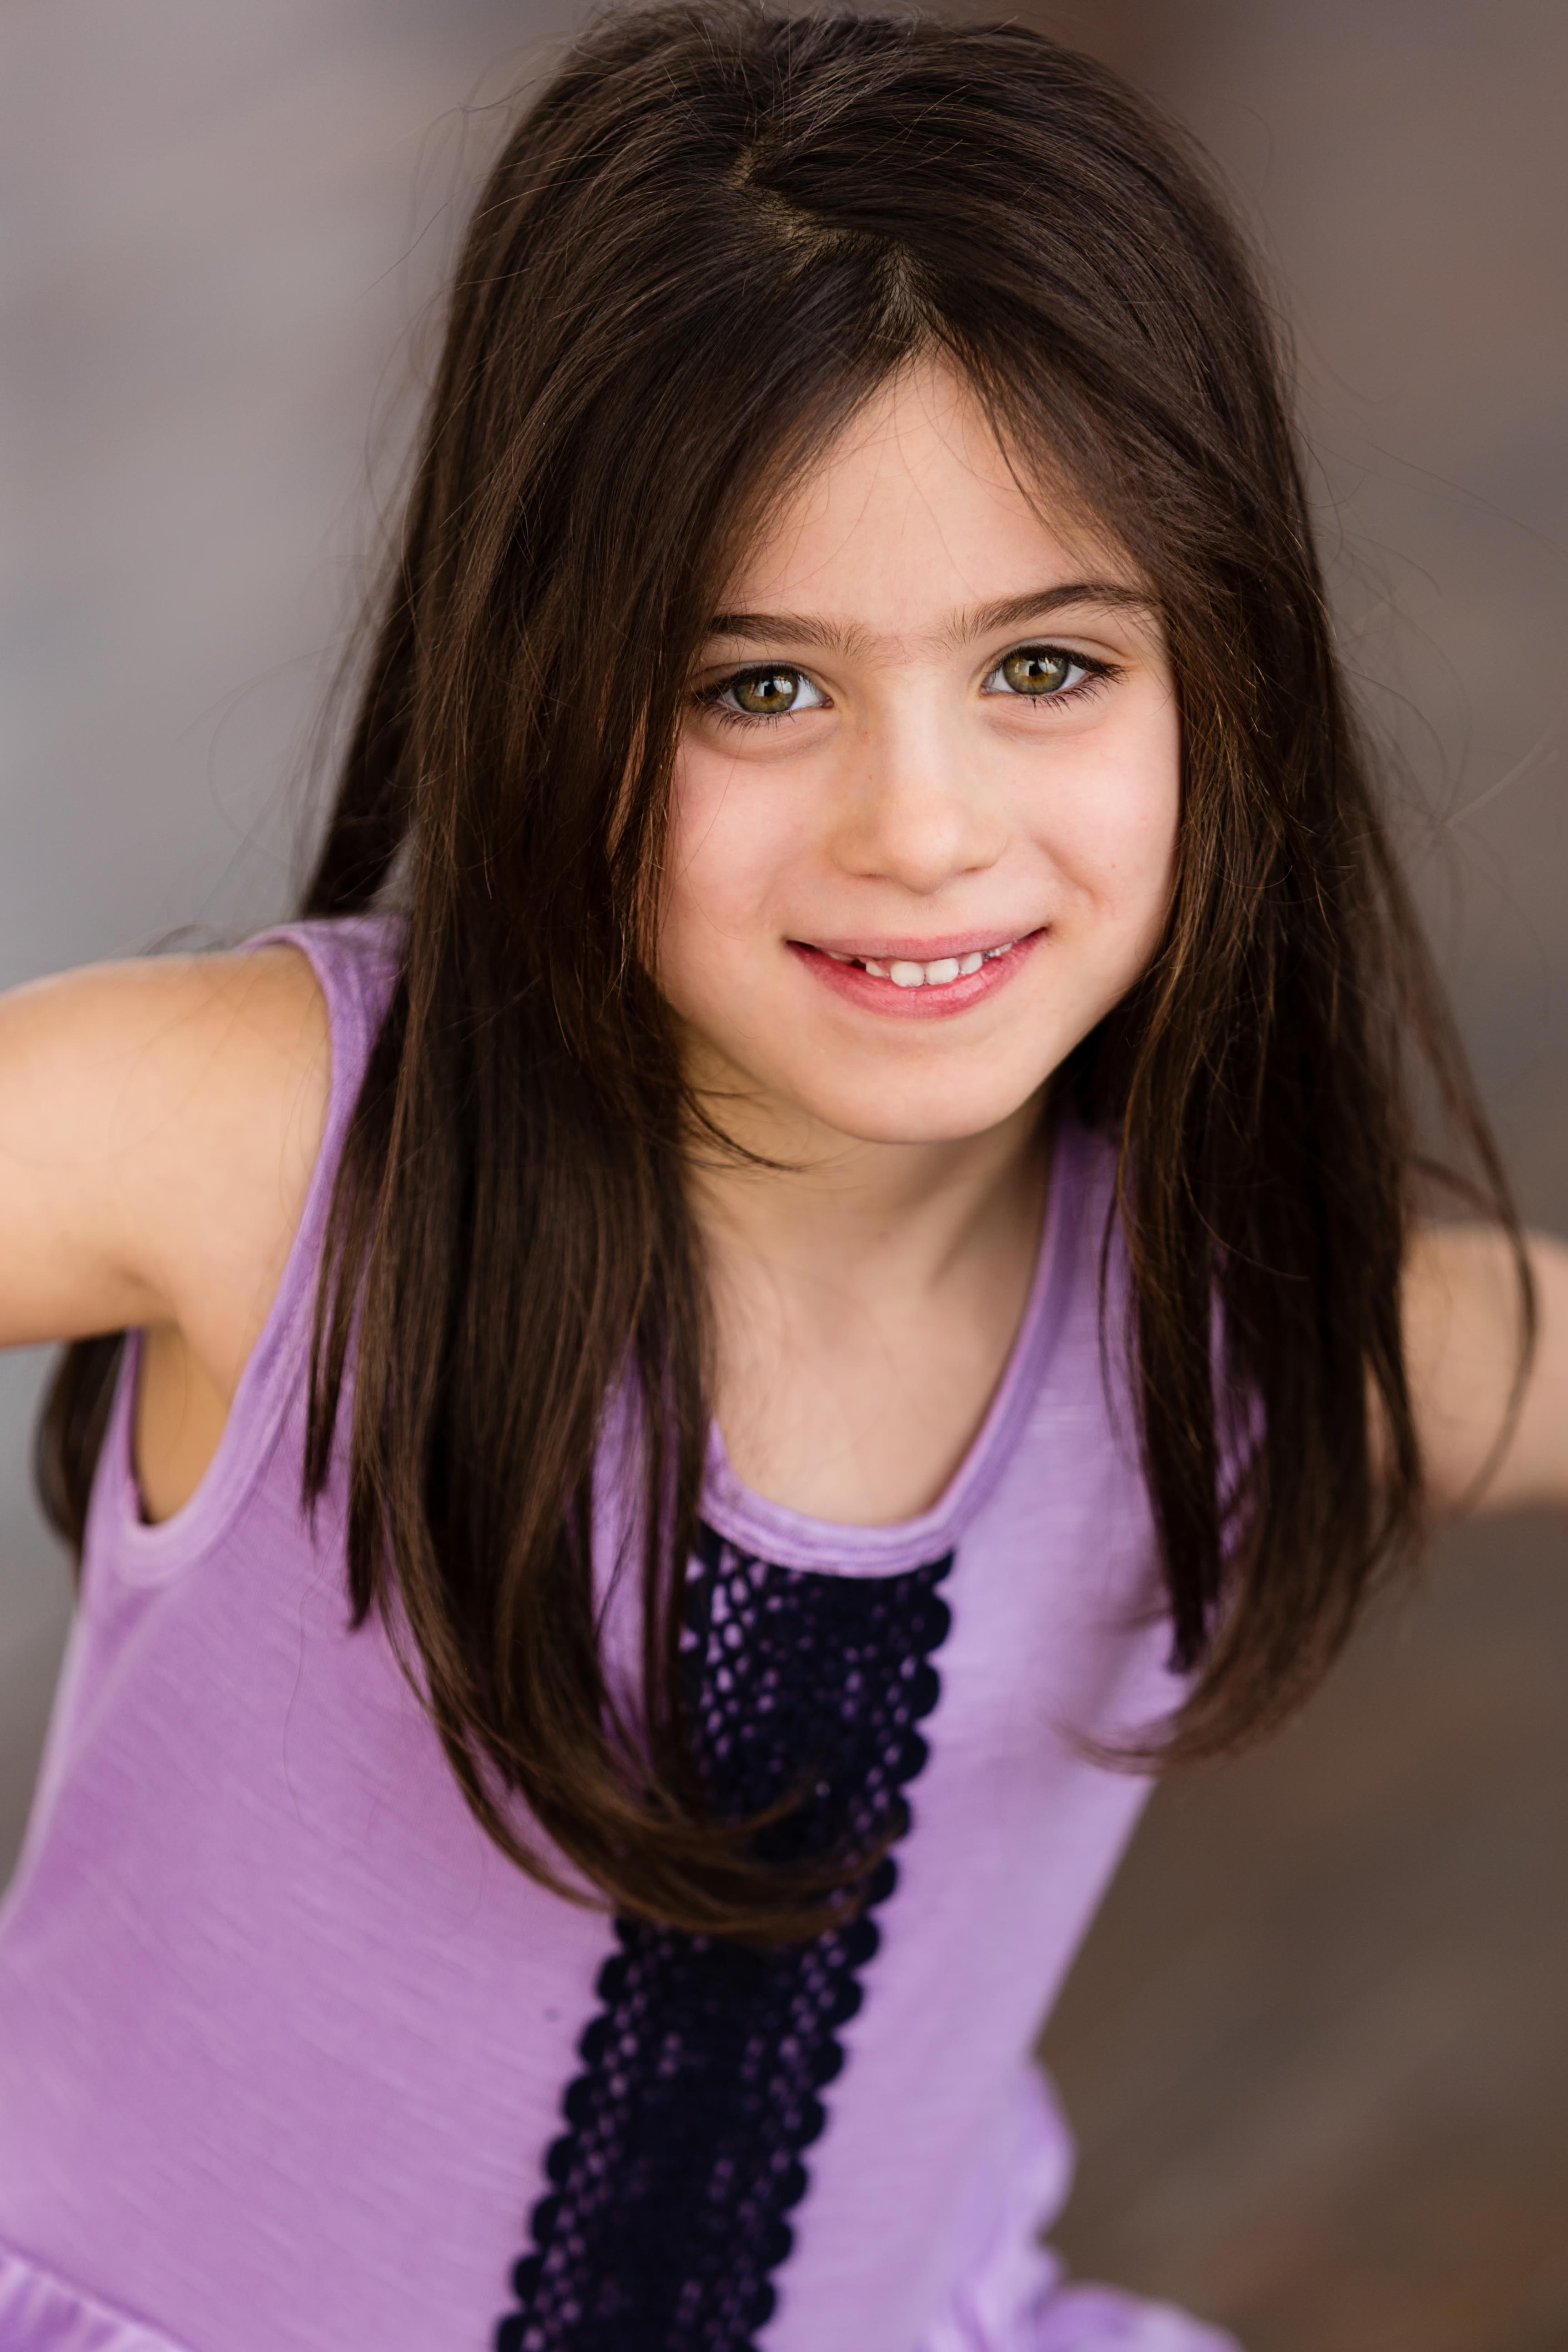 Child actress